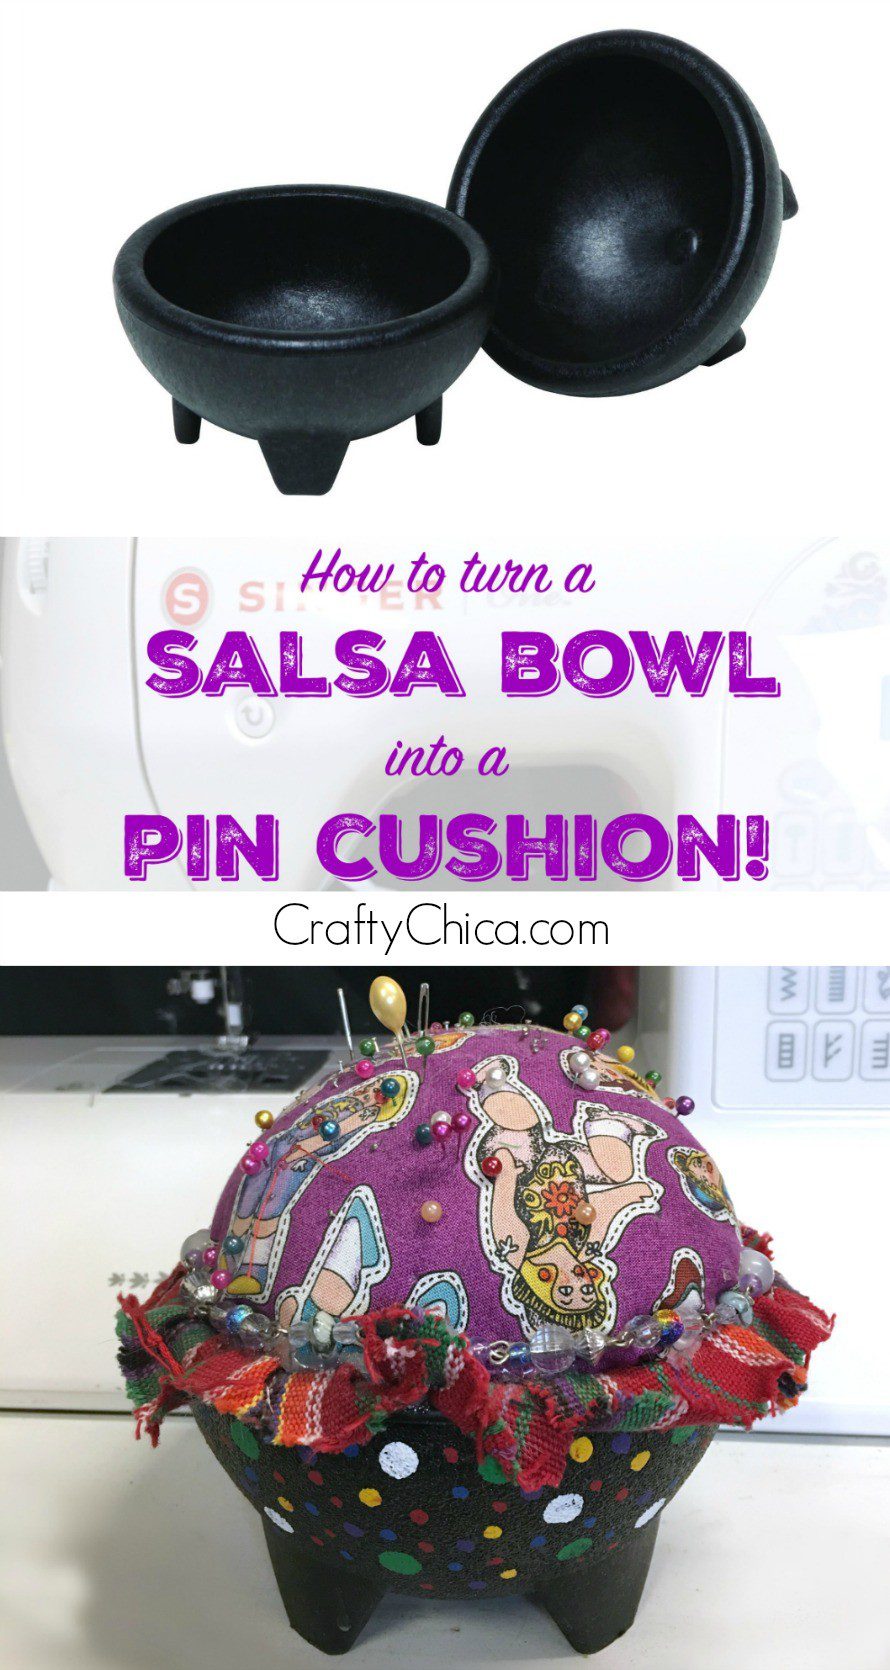 Turn a salsa dish into a pin cushion, by CraftyChica.com